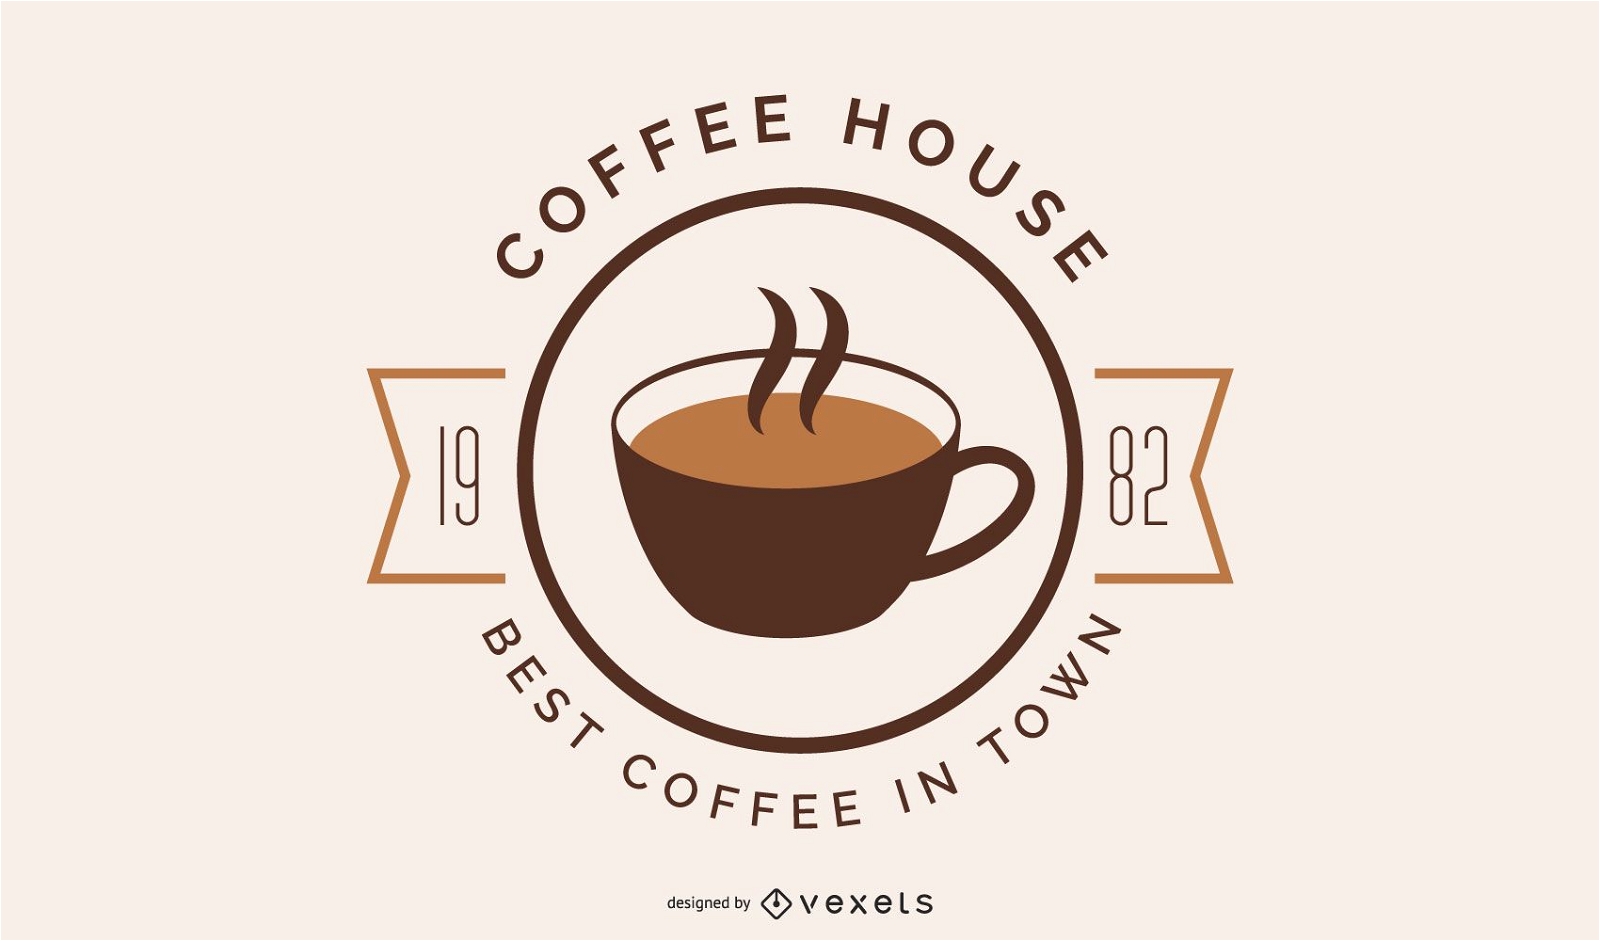 Coffee house logo design